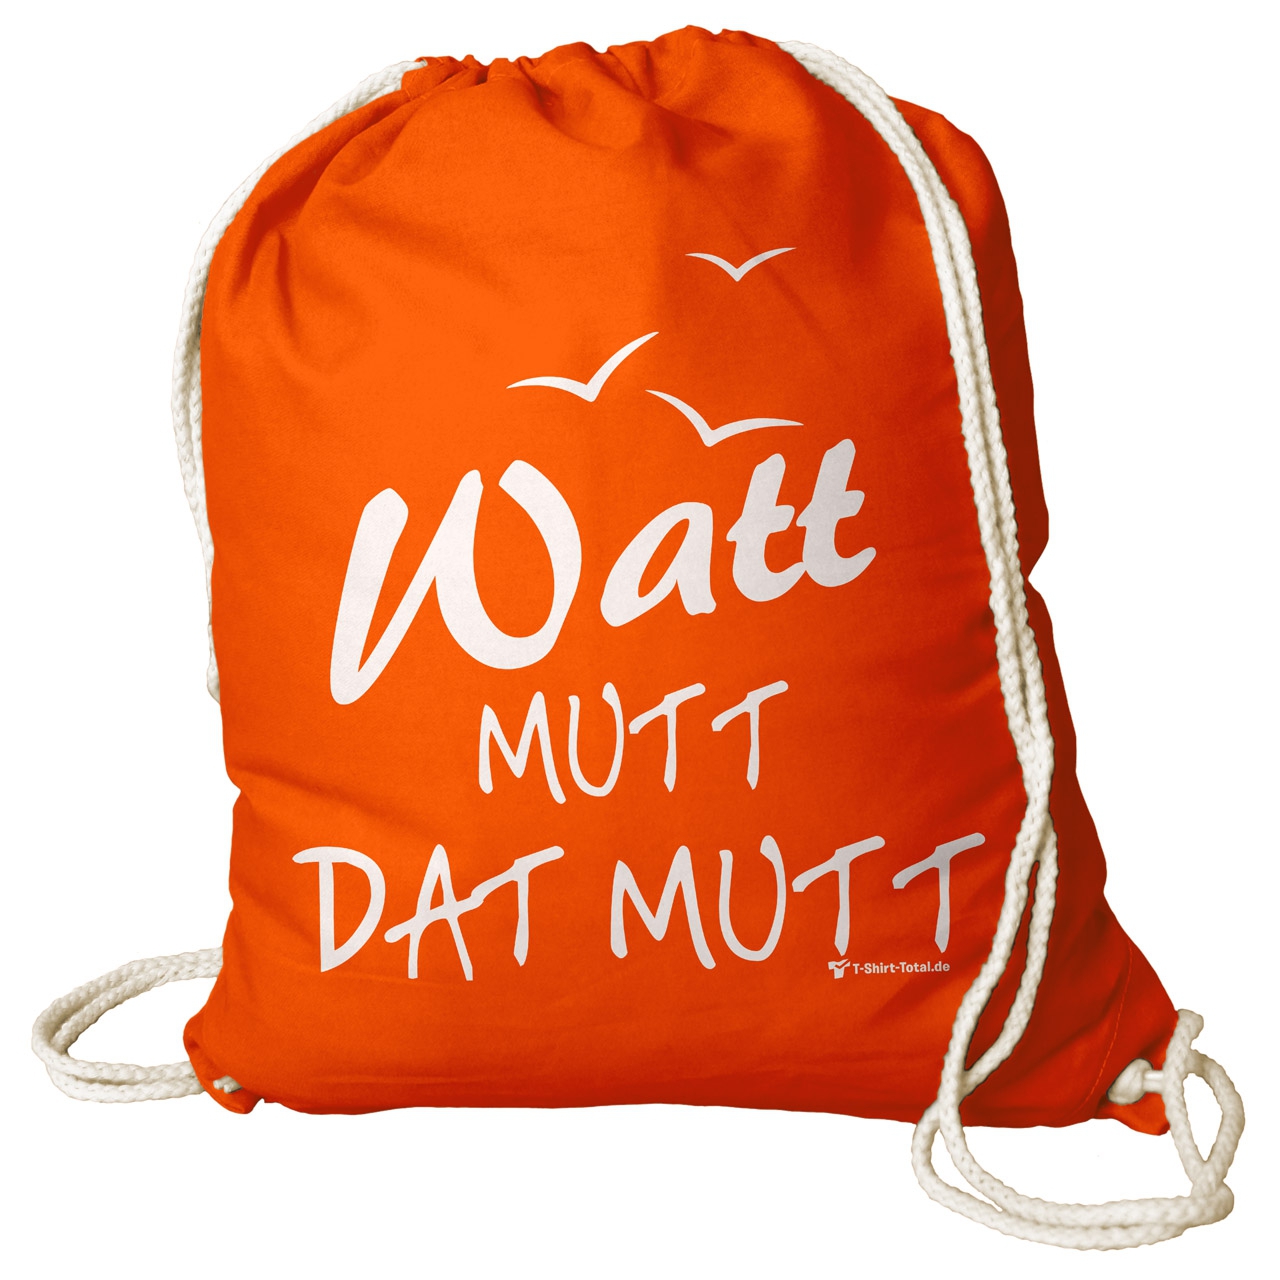 Watt mutt Rucksack Beutel orange